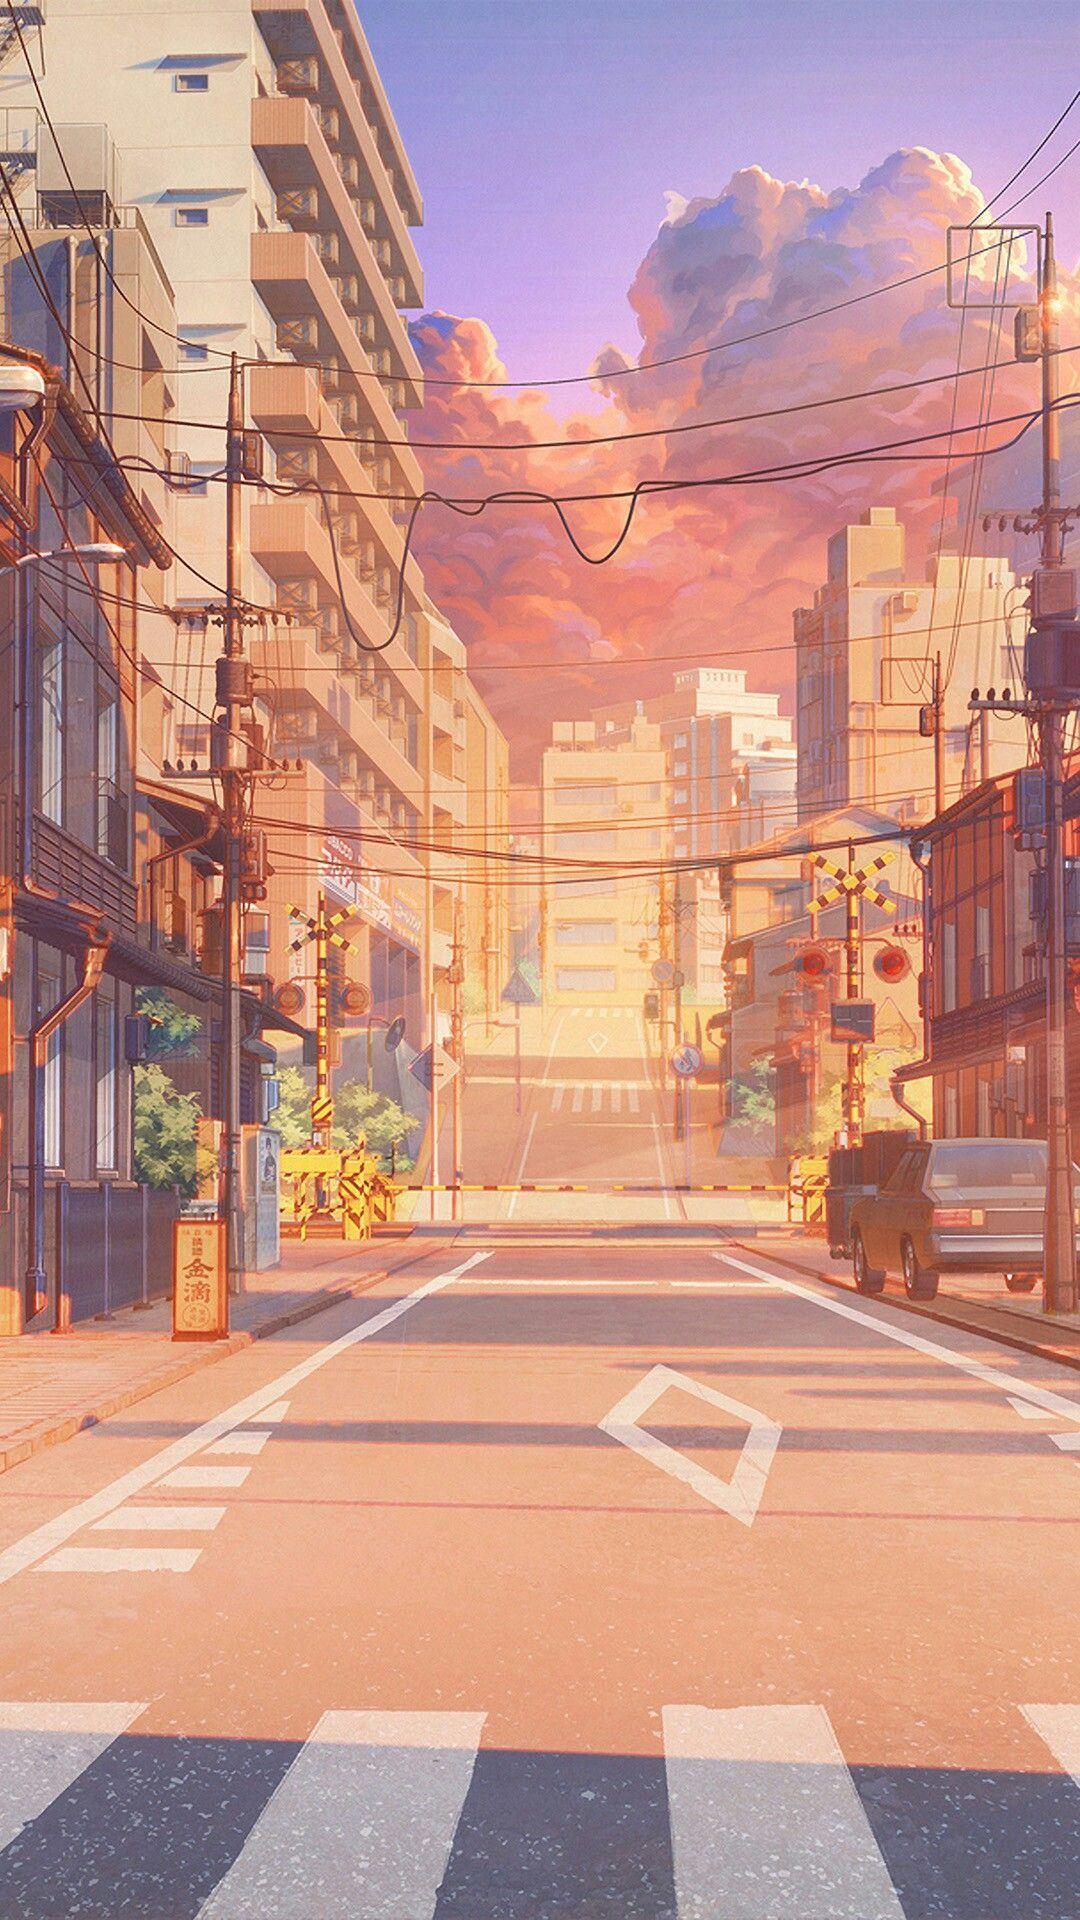 Anime sunset street illustration wallpaper. My Canvas